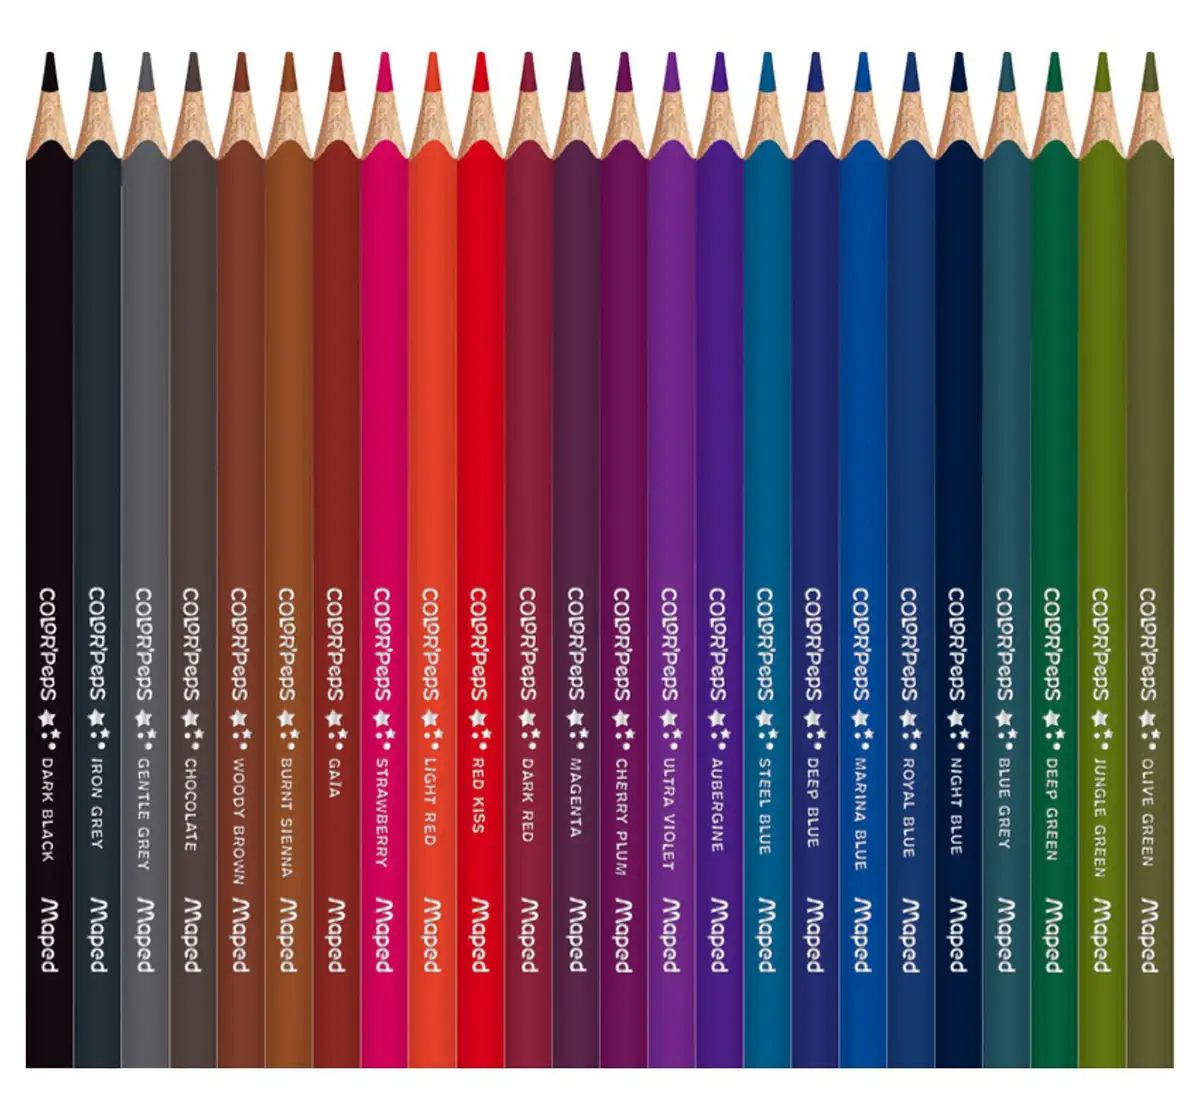 Maped 72 Colour Pencils, 7Y+ (Multicolour)